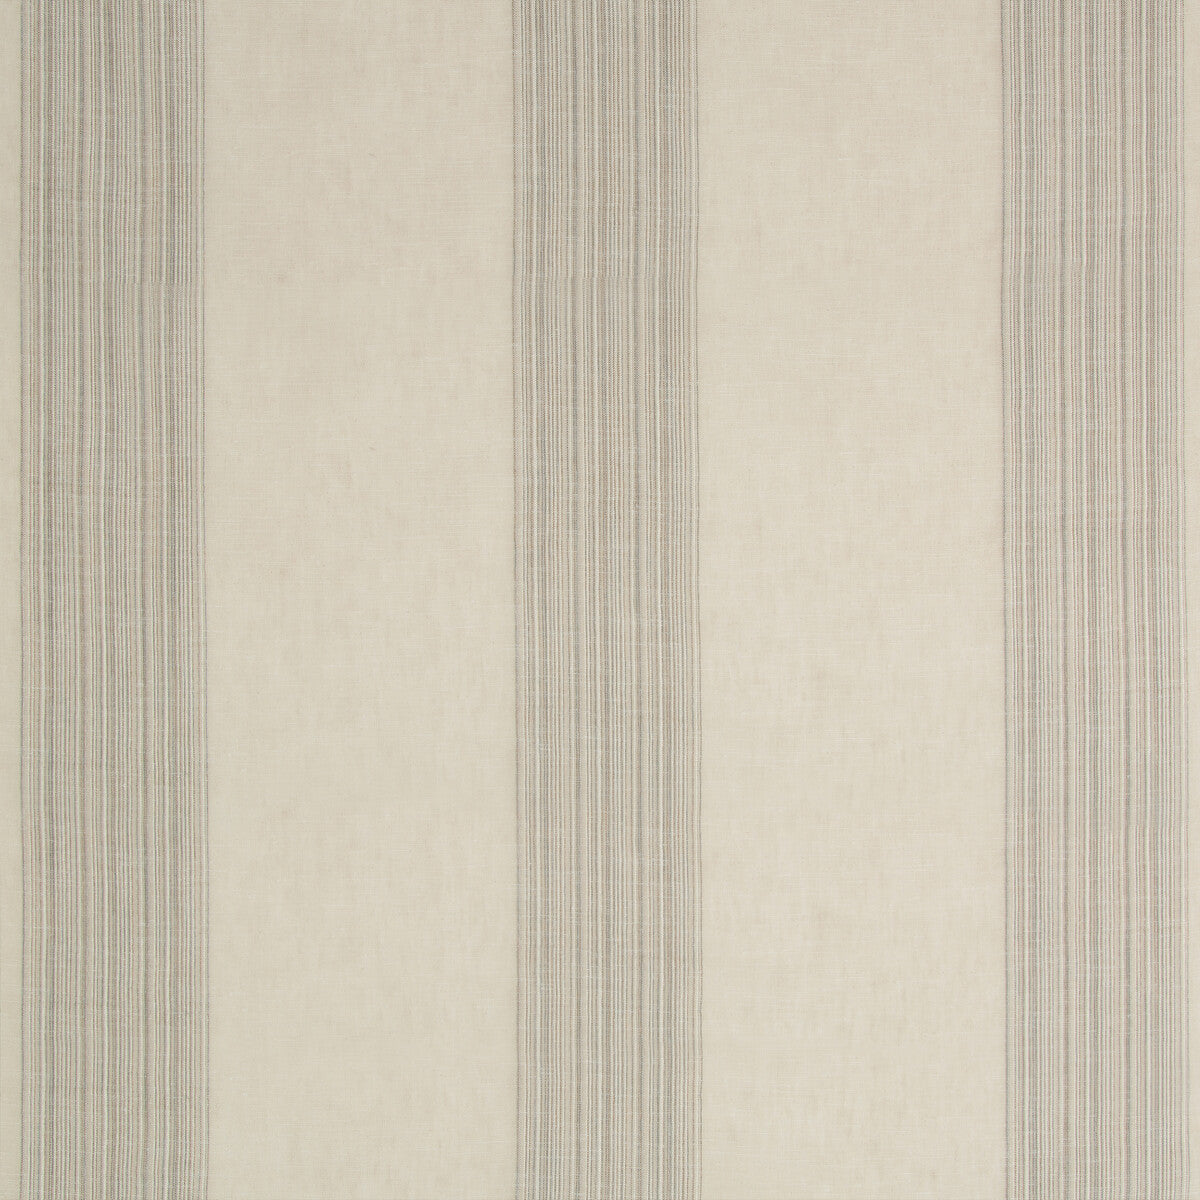 Kravet Fabric fabric in 4608-11 color - pattern 4608.11.0 - by Kravet Design